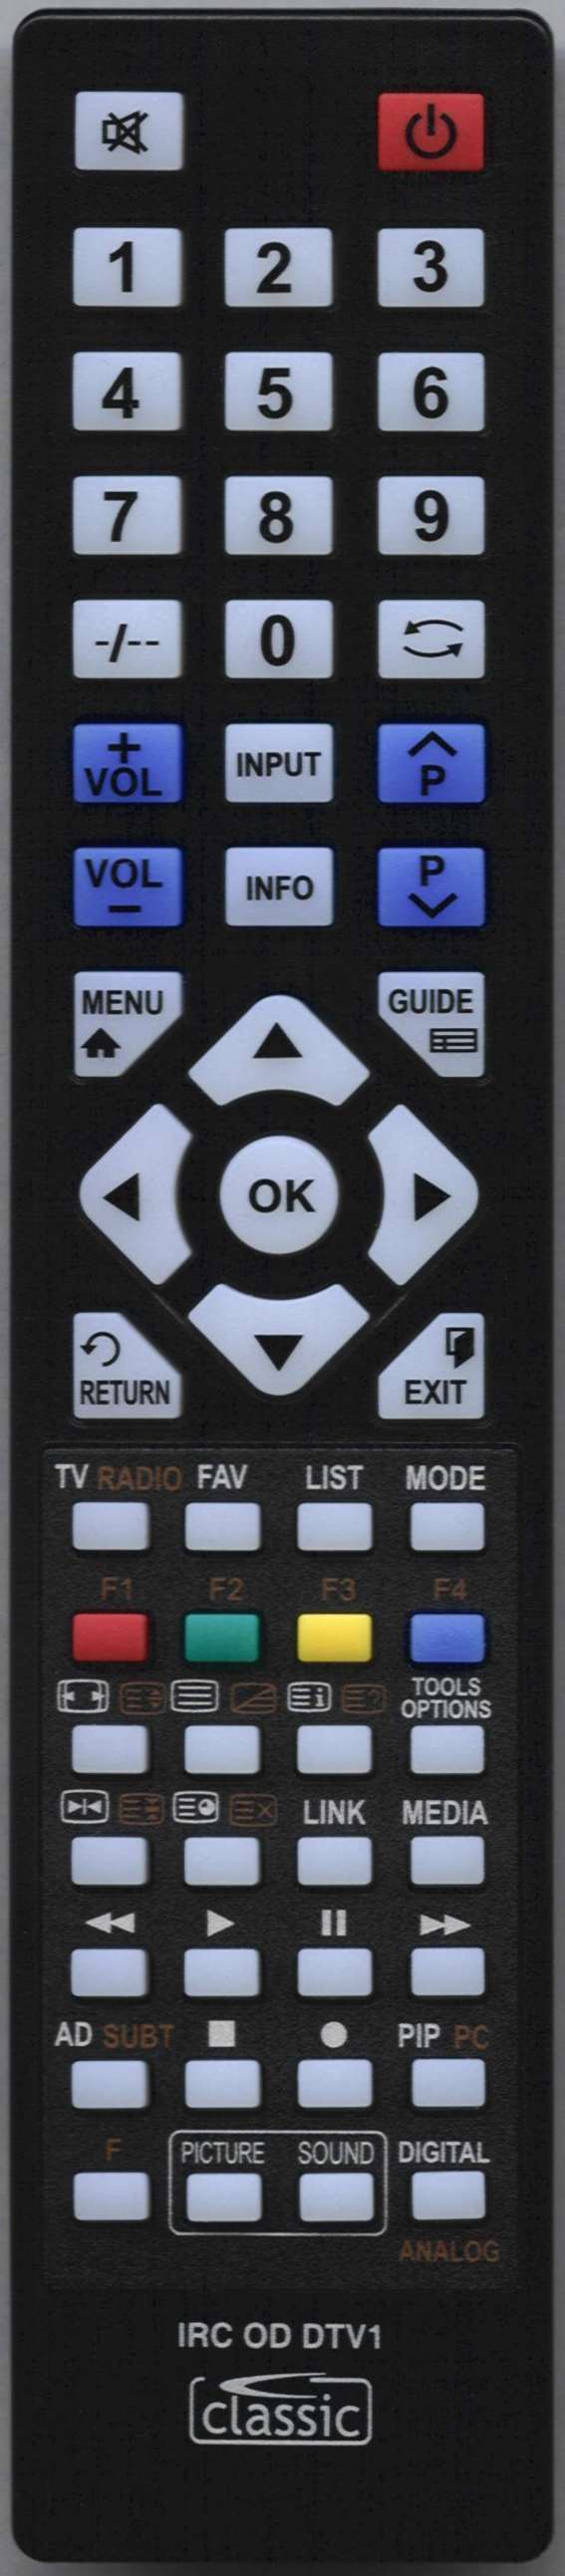 ORION TV32QBK997DVDS Remote Control Alternative